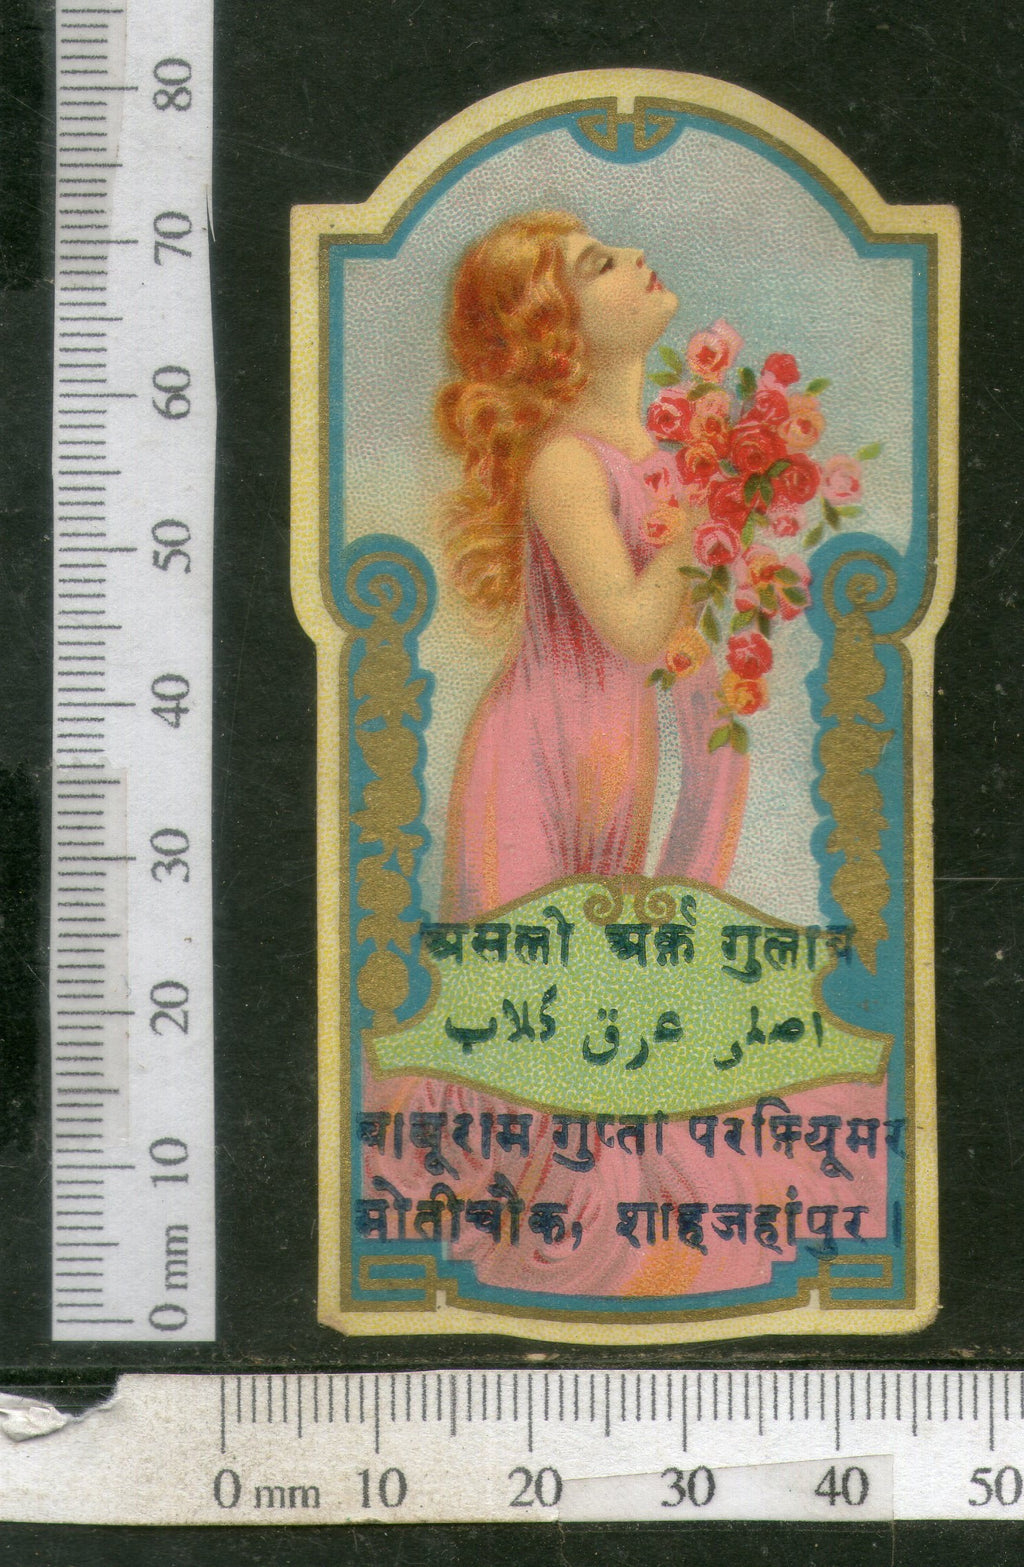 India 1950's Rose Water Women Flowers Printed Vintage Perfume Label # LBL139